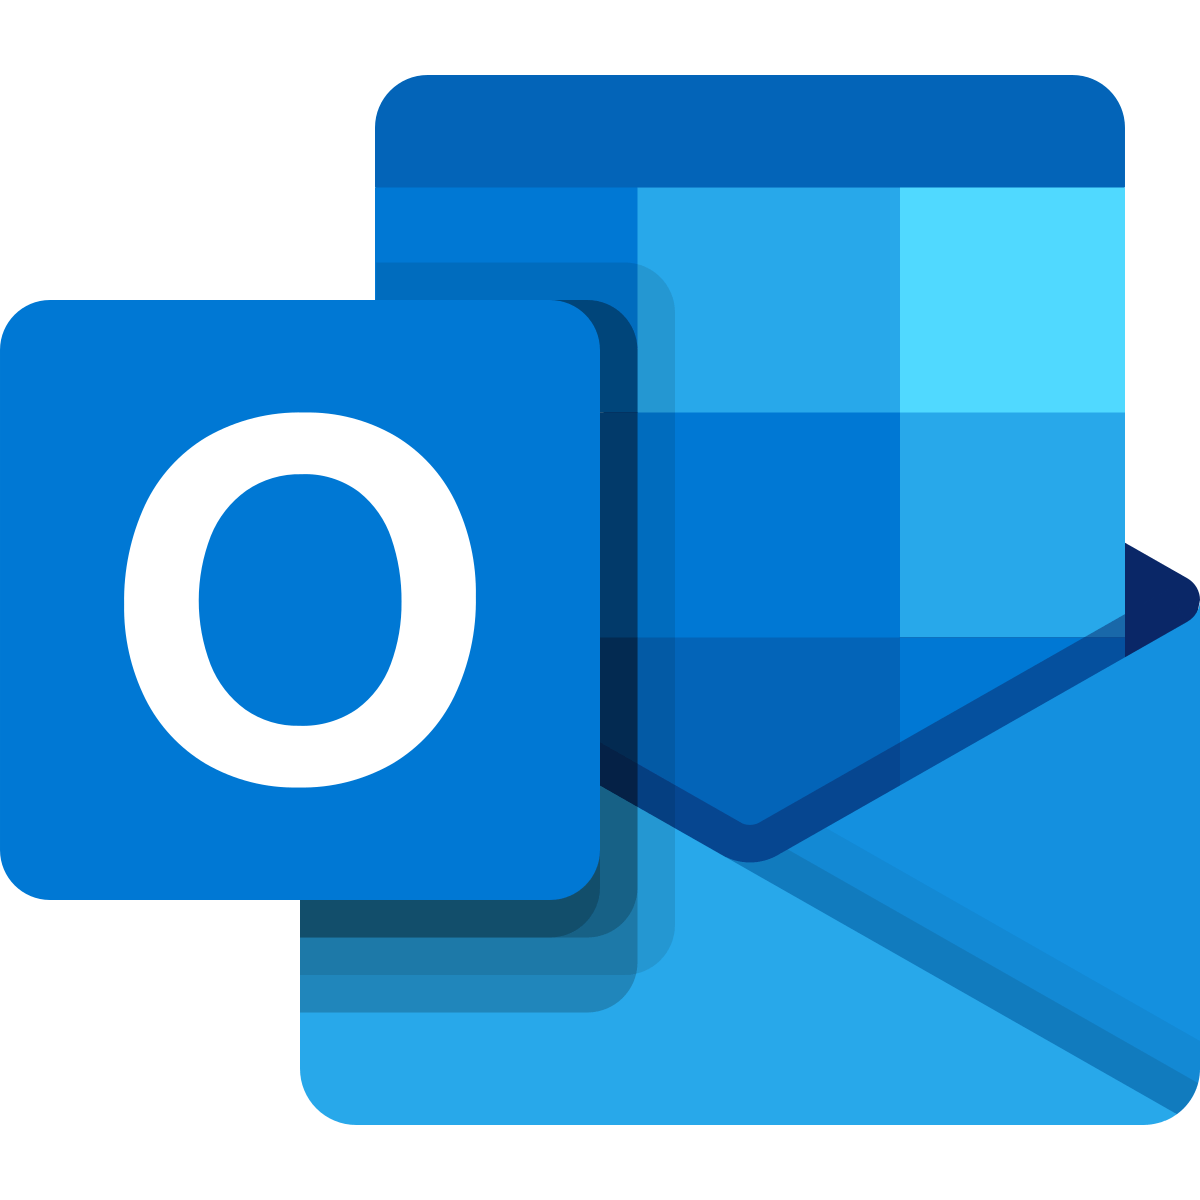 Microsoft_Office_Outlook - server execution failed error